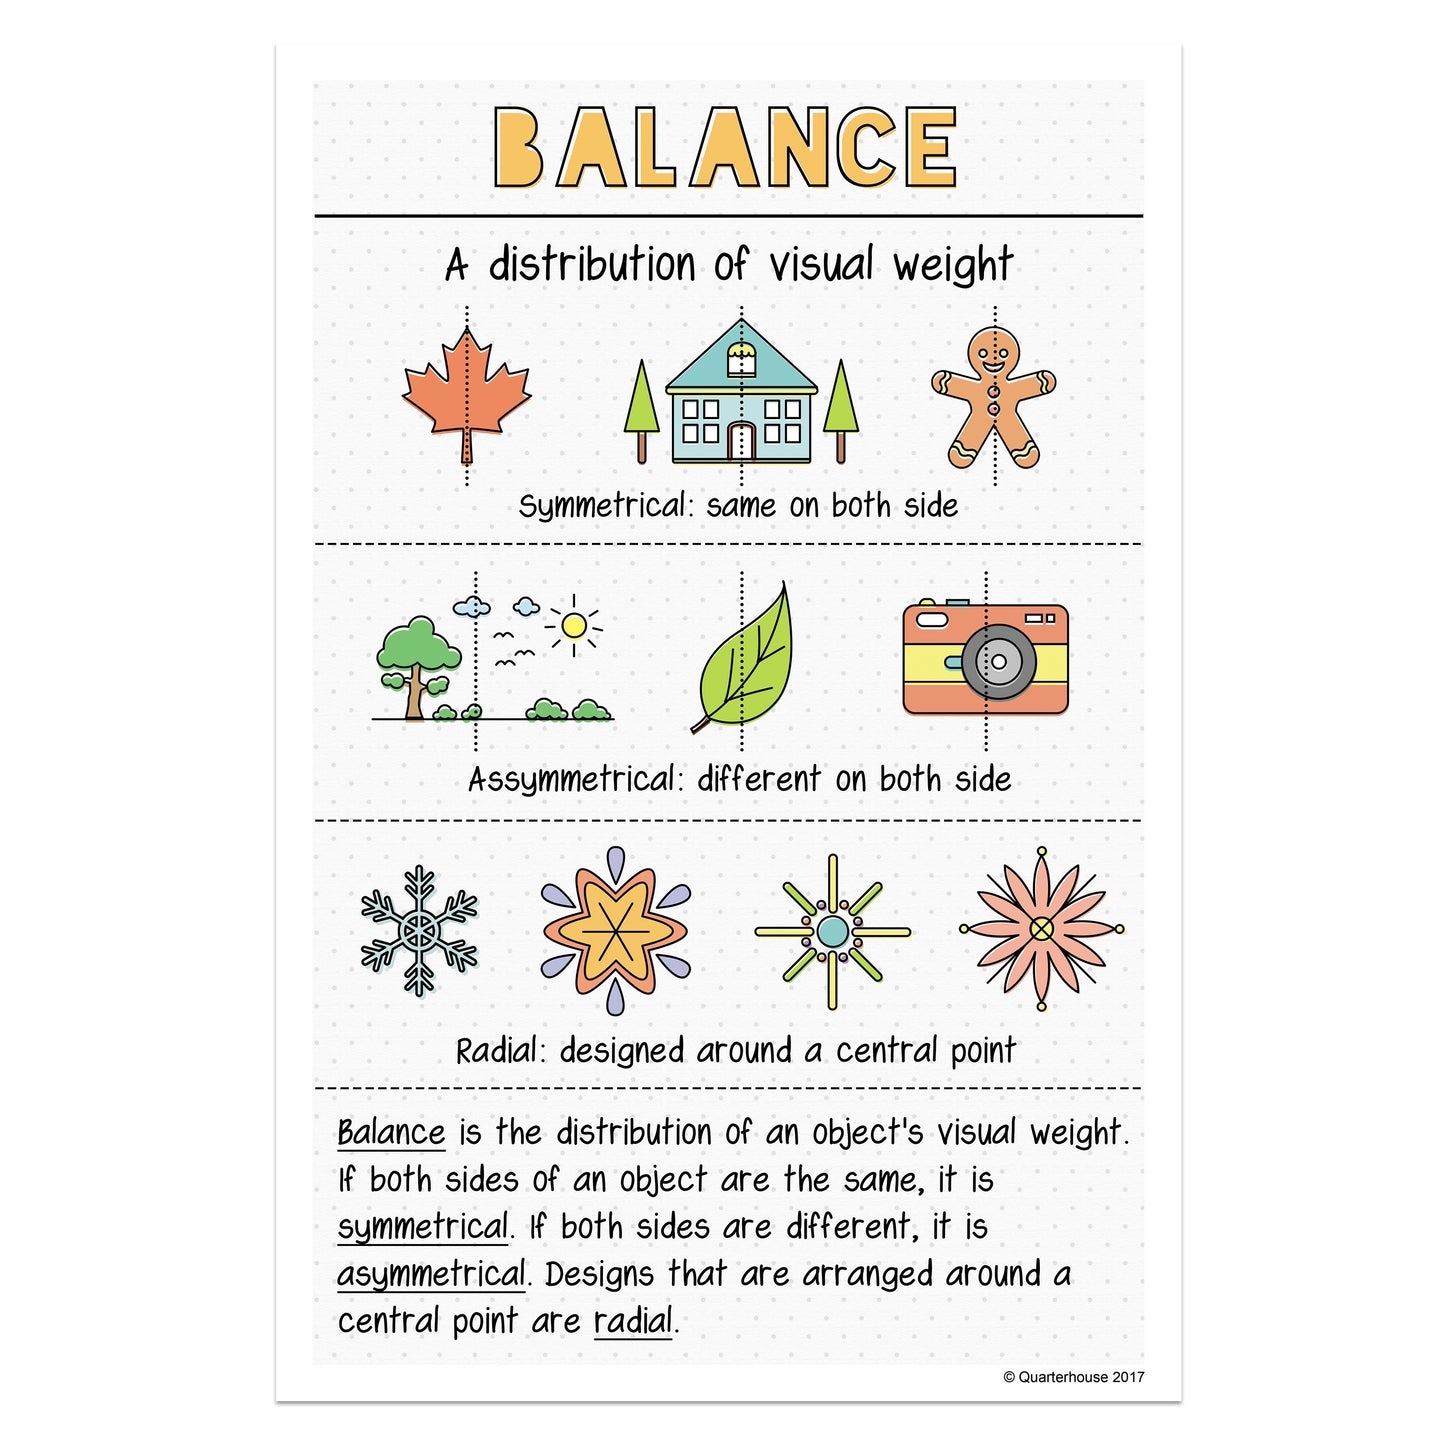 Quarterhouse Principles of Design - Balance Poster, Art Classroom Materials for Teachers